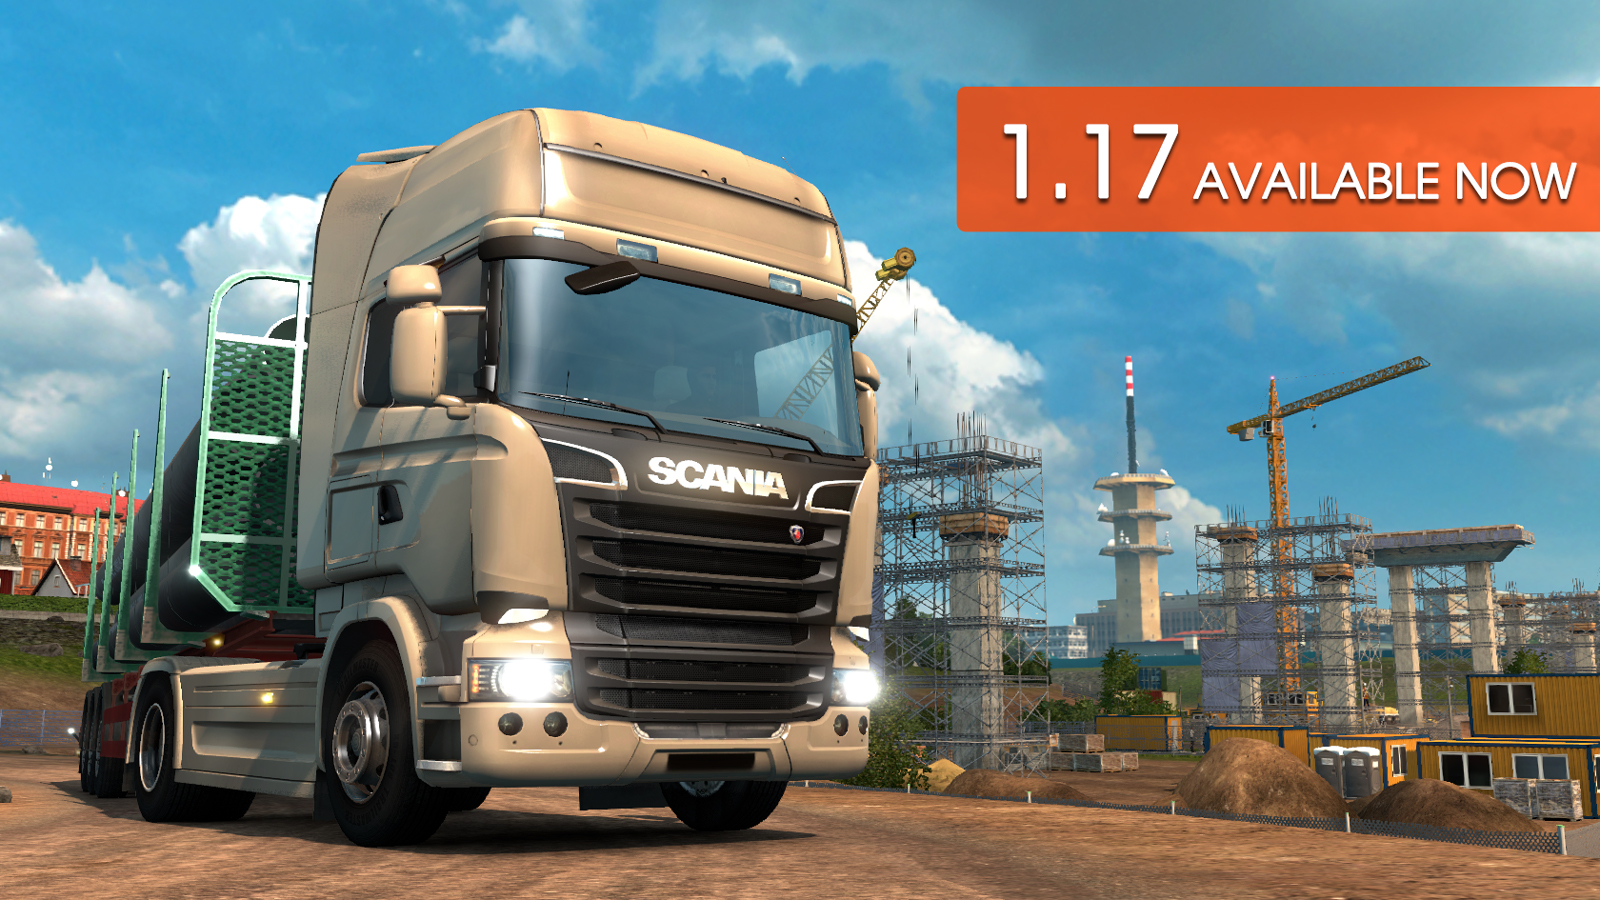 SONY PLAYSTATION PS4 TRAILER V1 Mod - Euro Truck Simulator 2 Mods